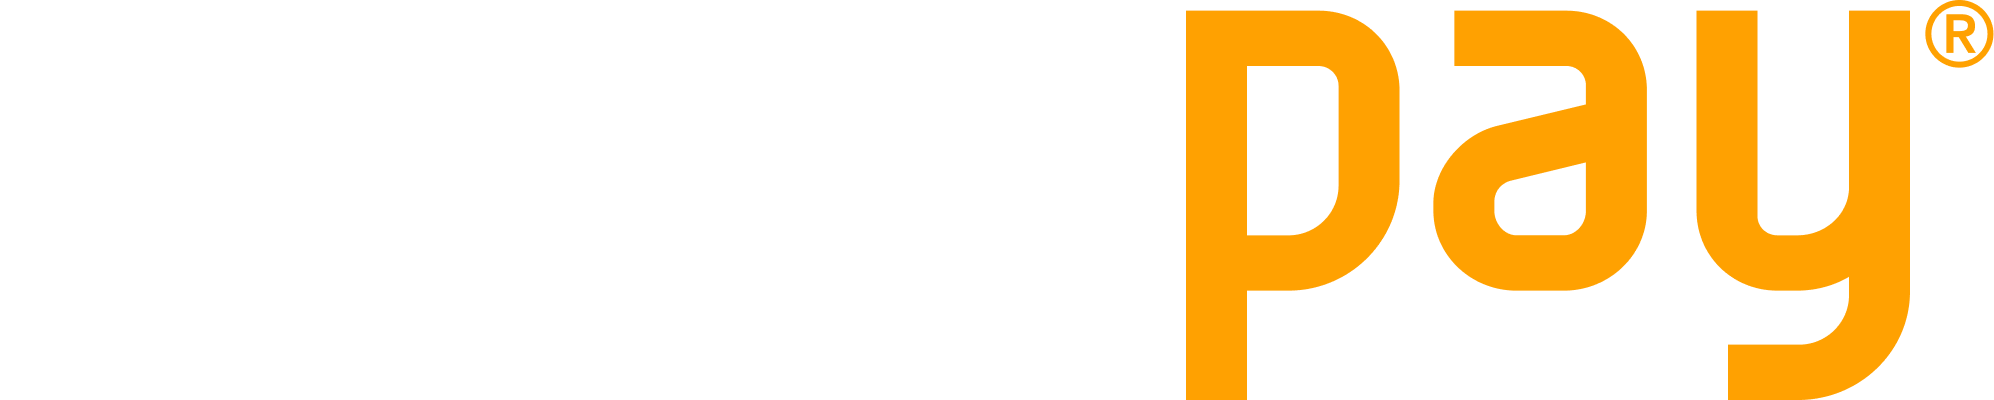 versapay-logo-dark-png-1